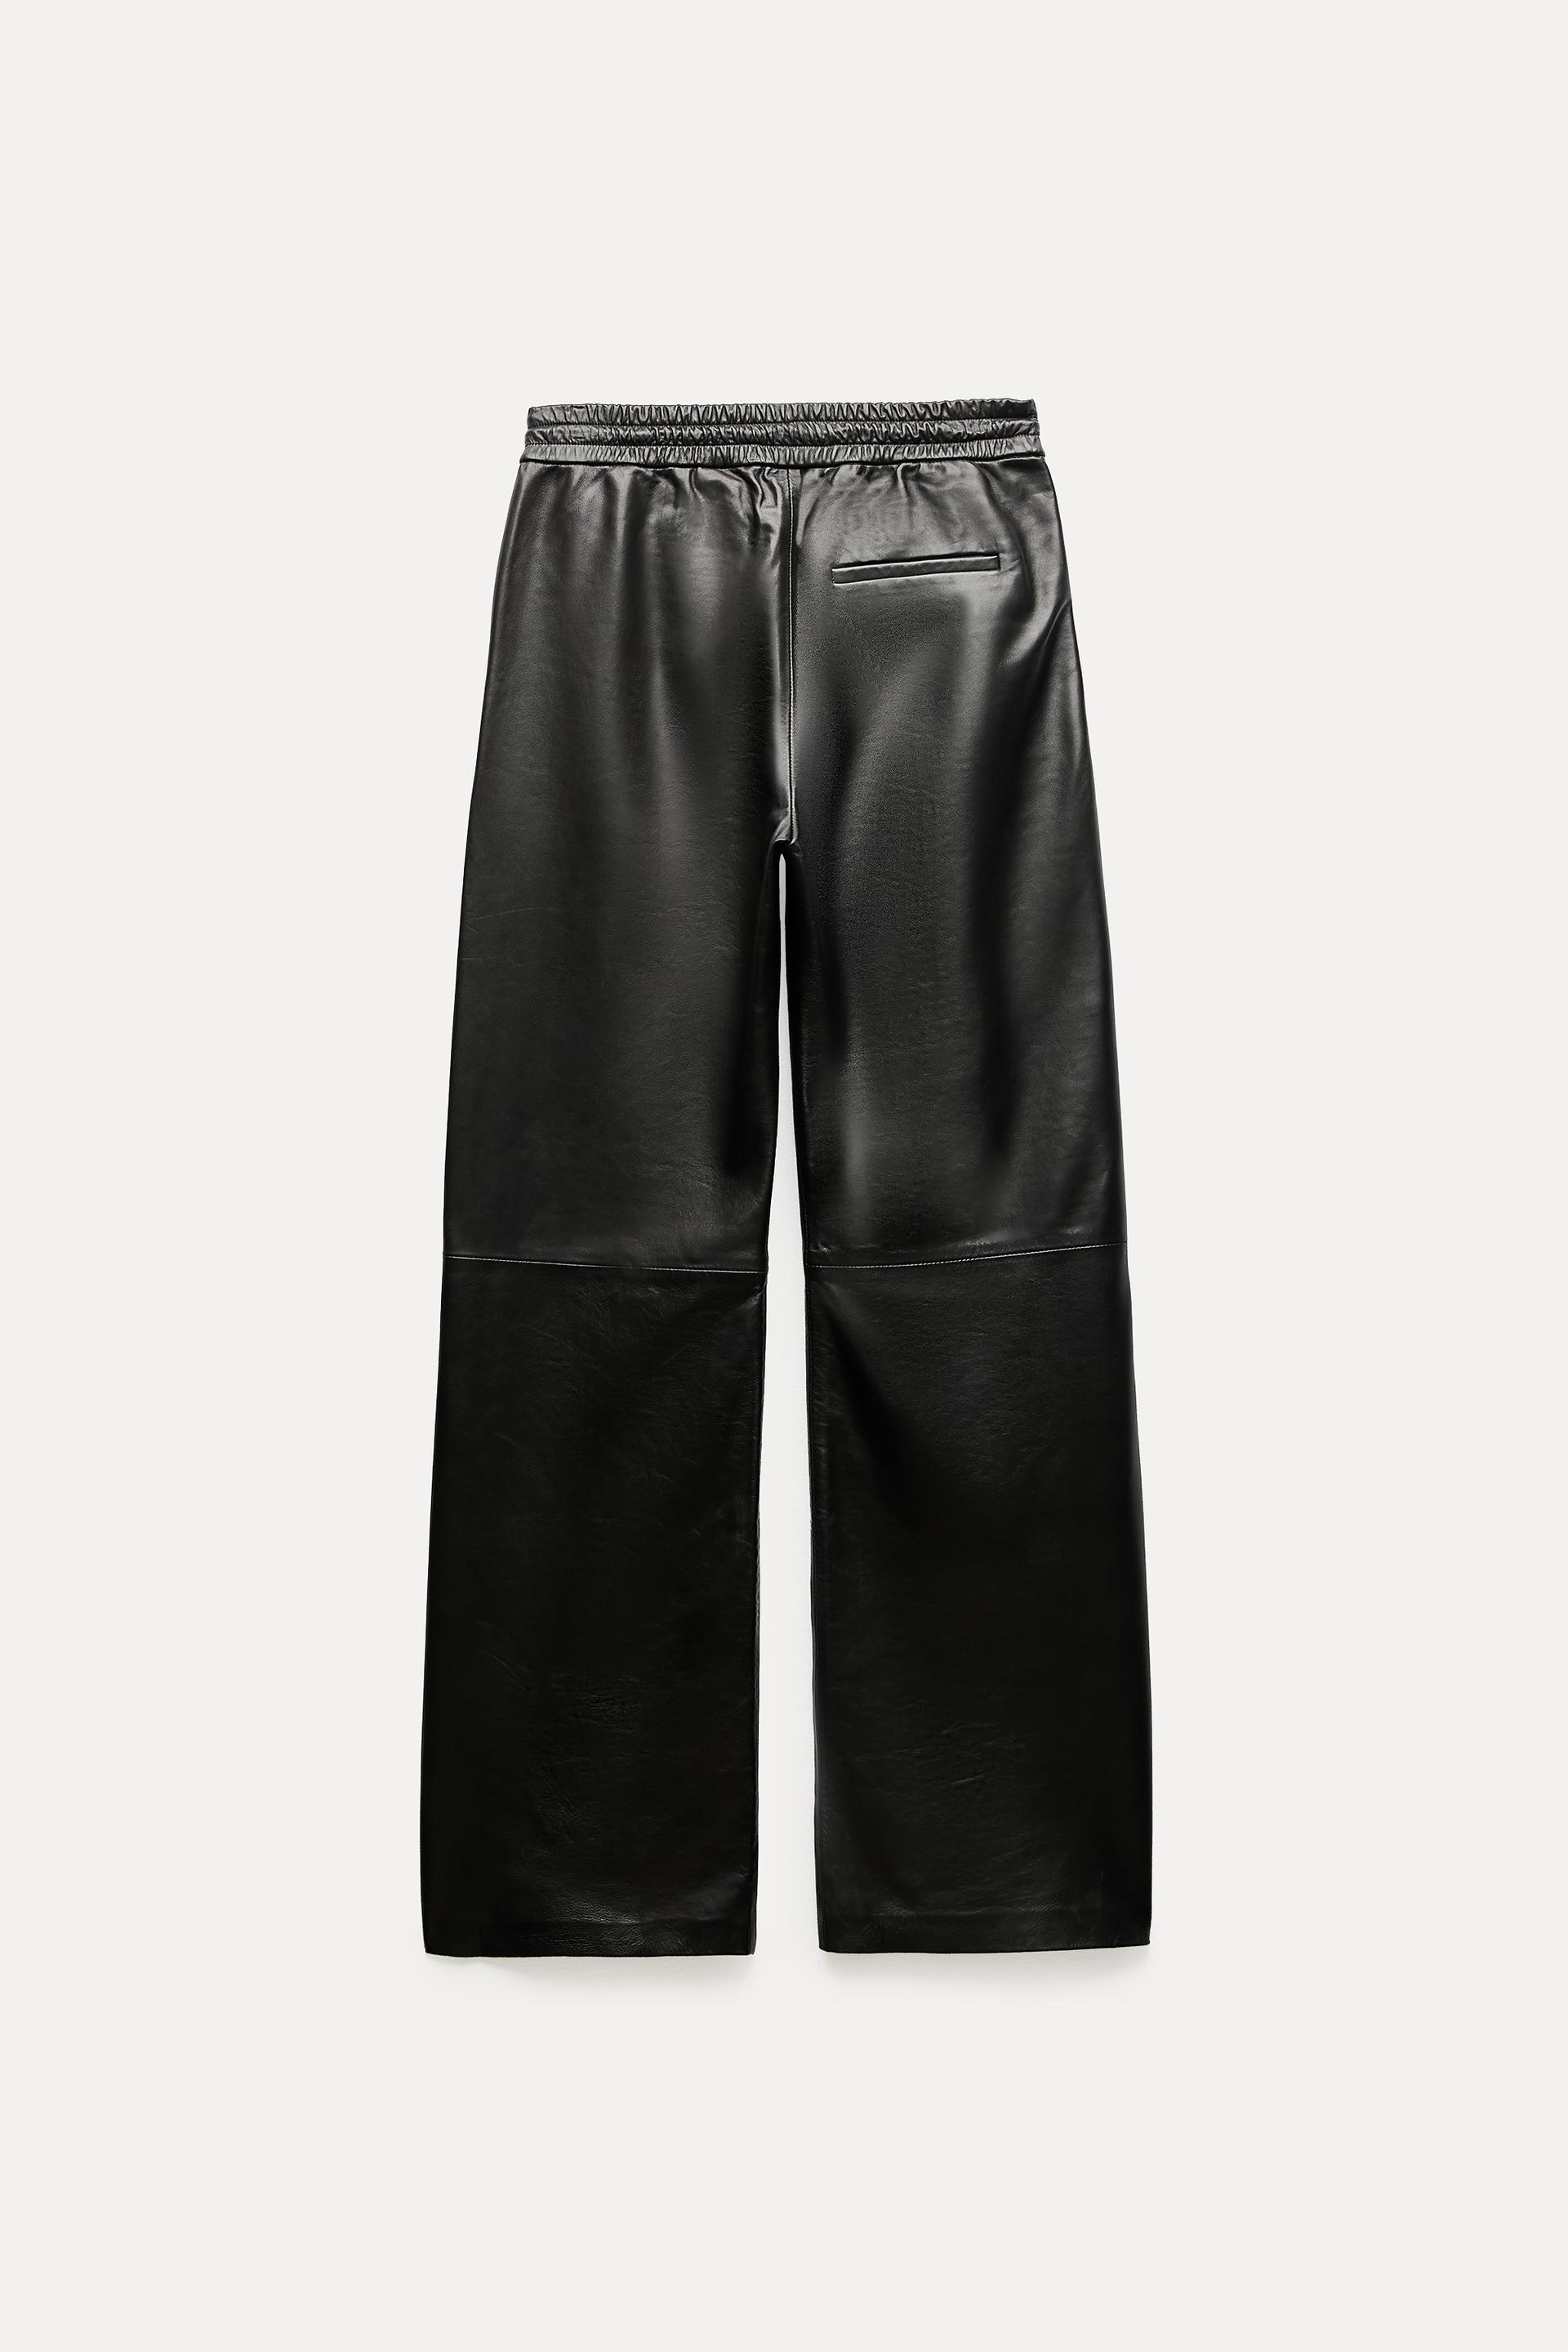 Zara Woman Black Capri Length Pants with Metal Stud Waist Band